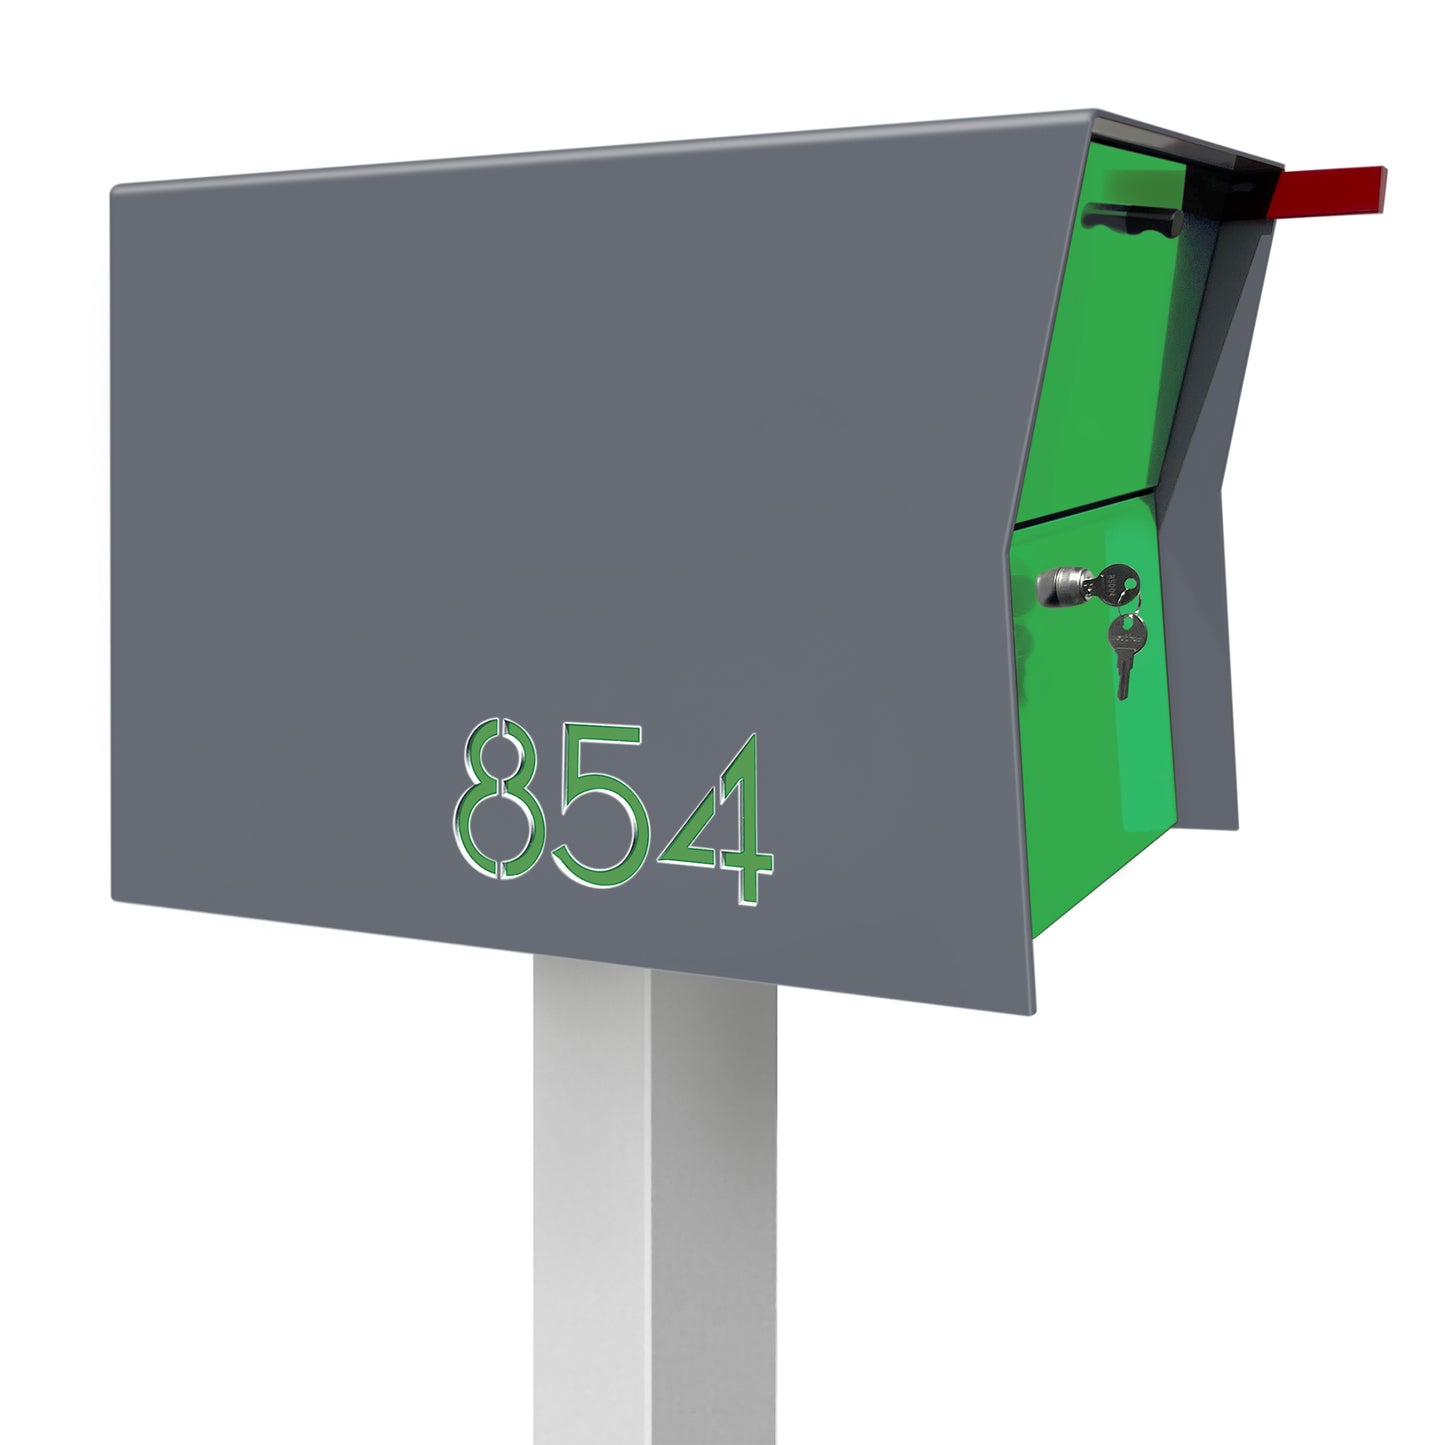 NEW! The Retrobox Locking Package Dropbox in GRAY- Modern Mailbox